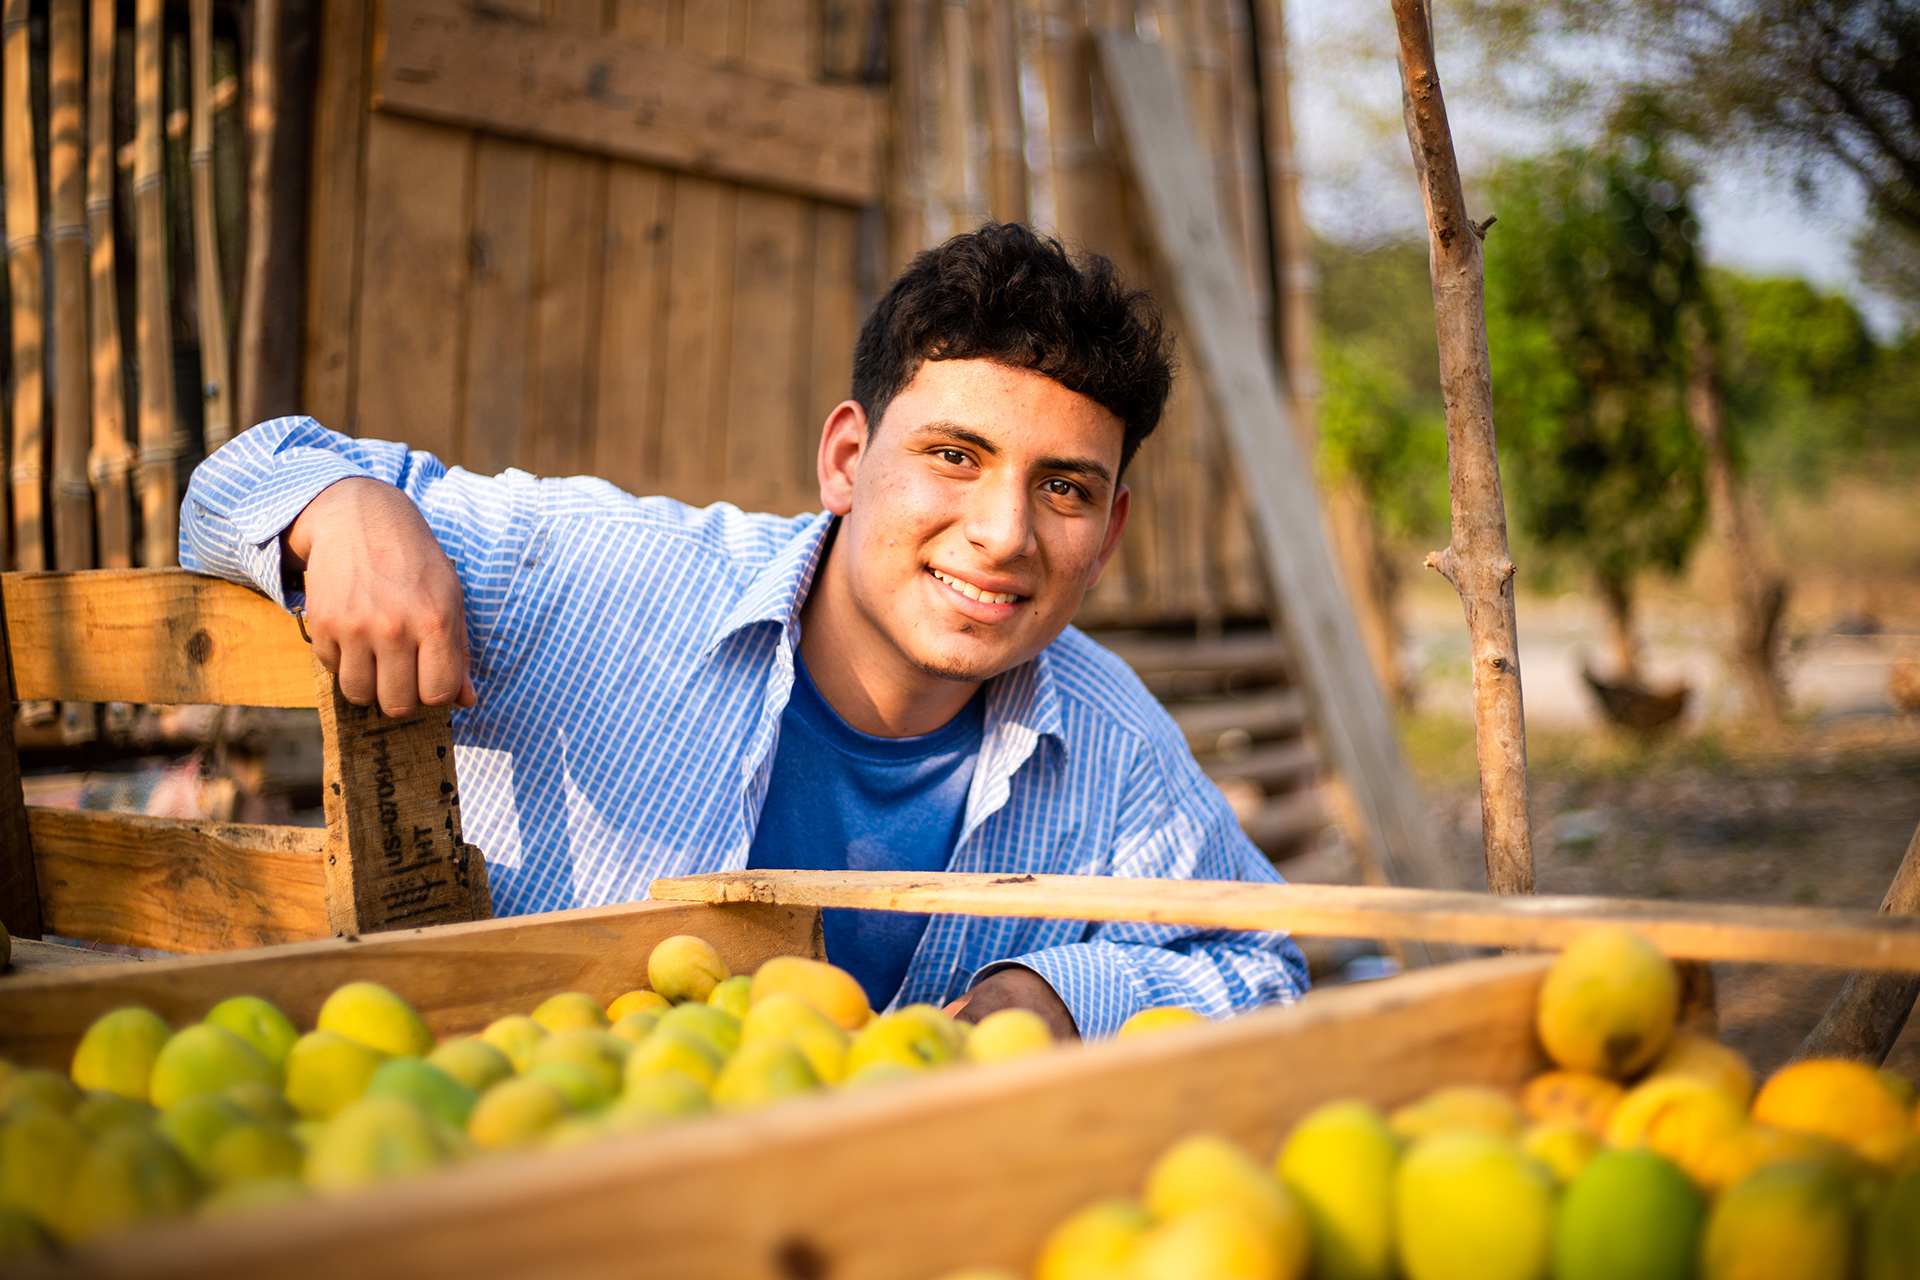 Israel sells his family's mangoes